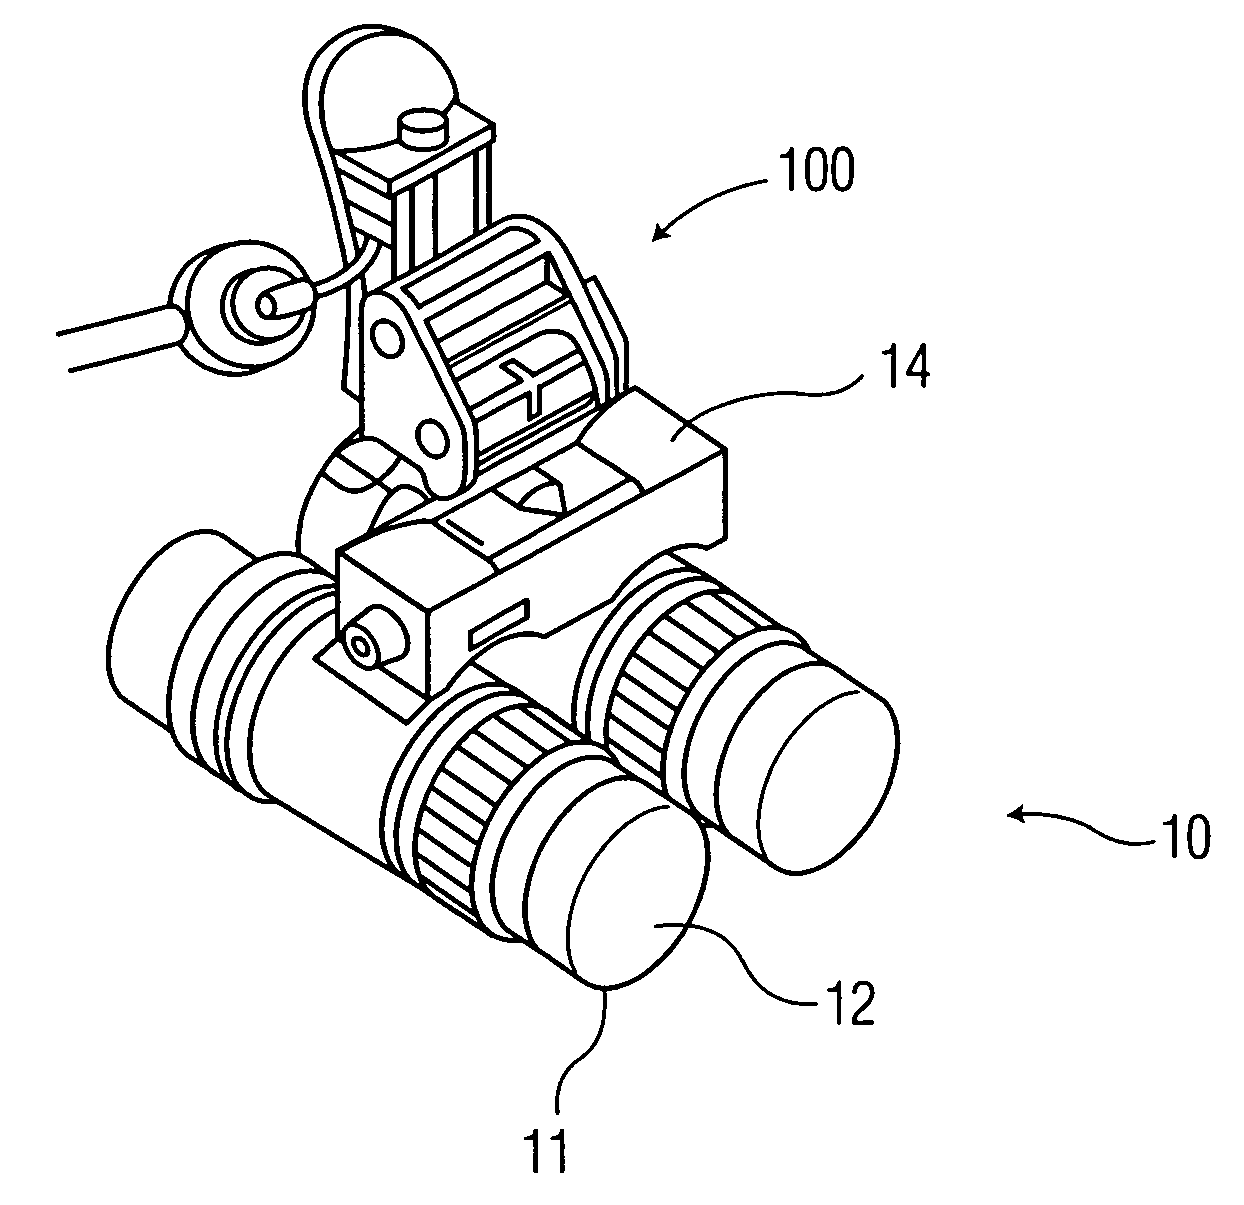 Line of sight adjustment for night vision binoculars